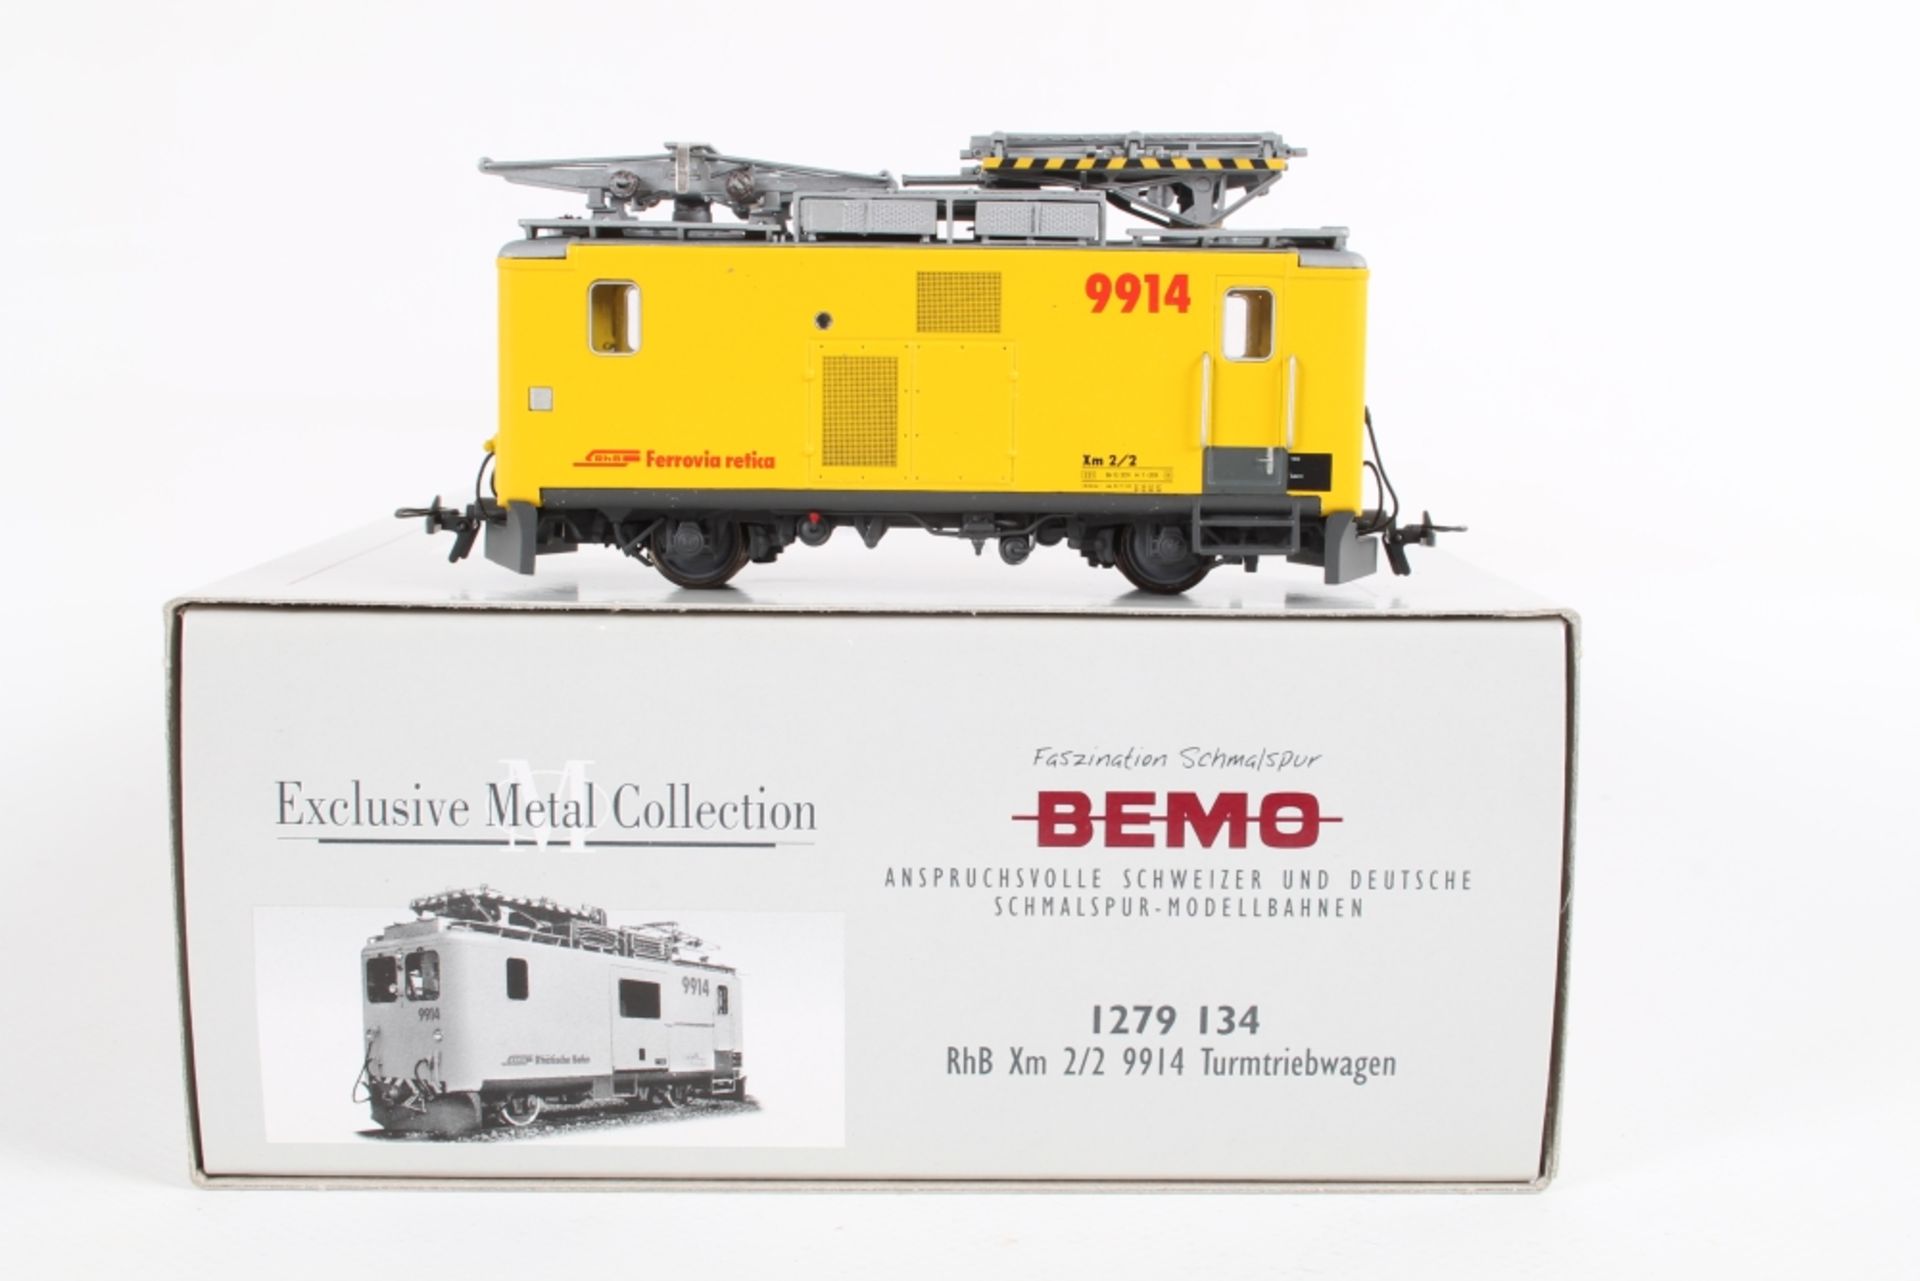 Bemo Exclusiv Metal Collection, 1279 134